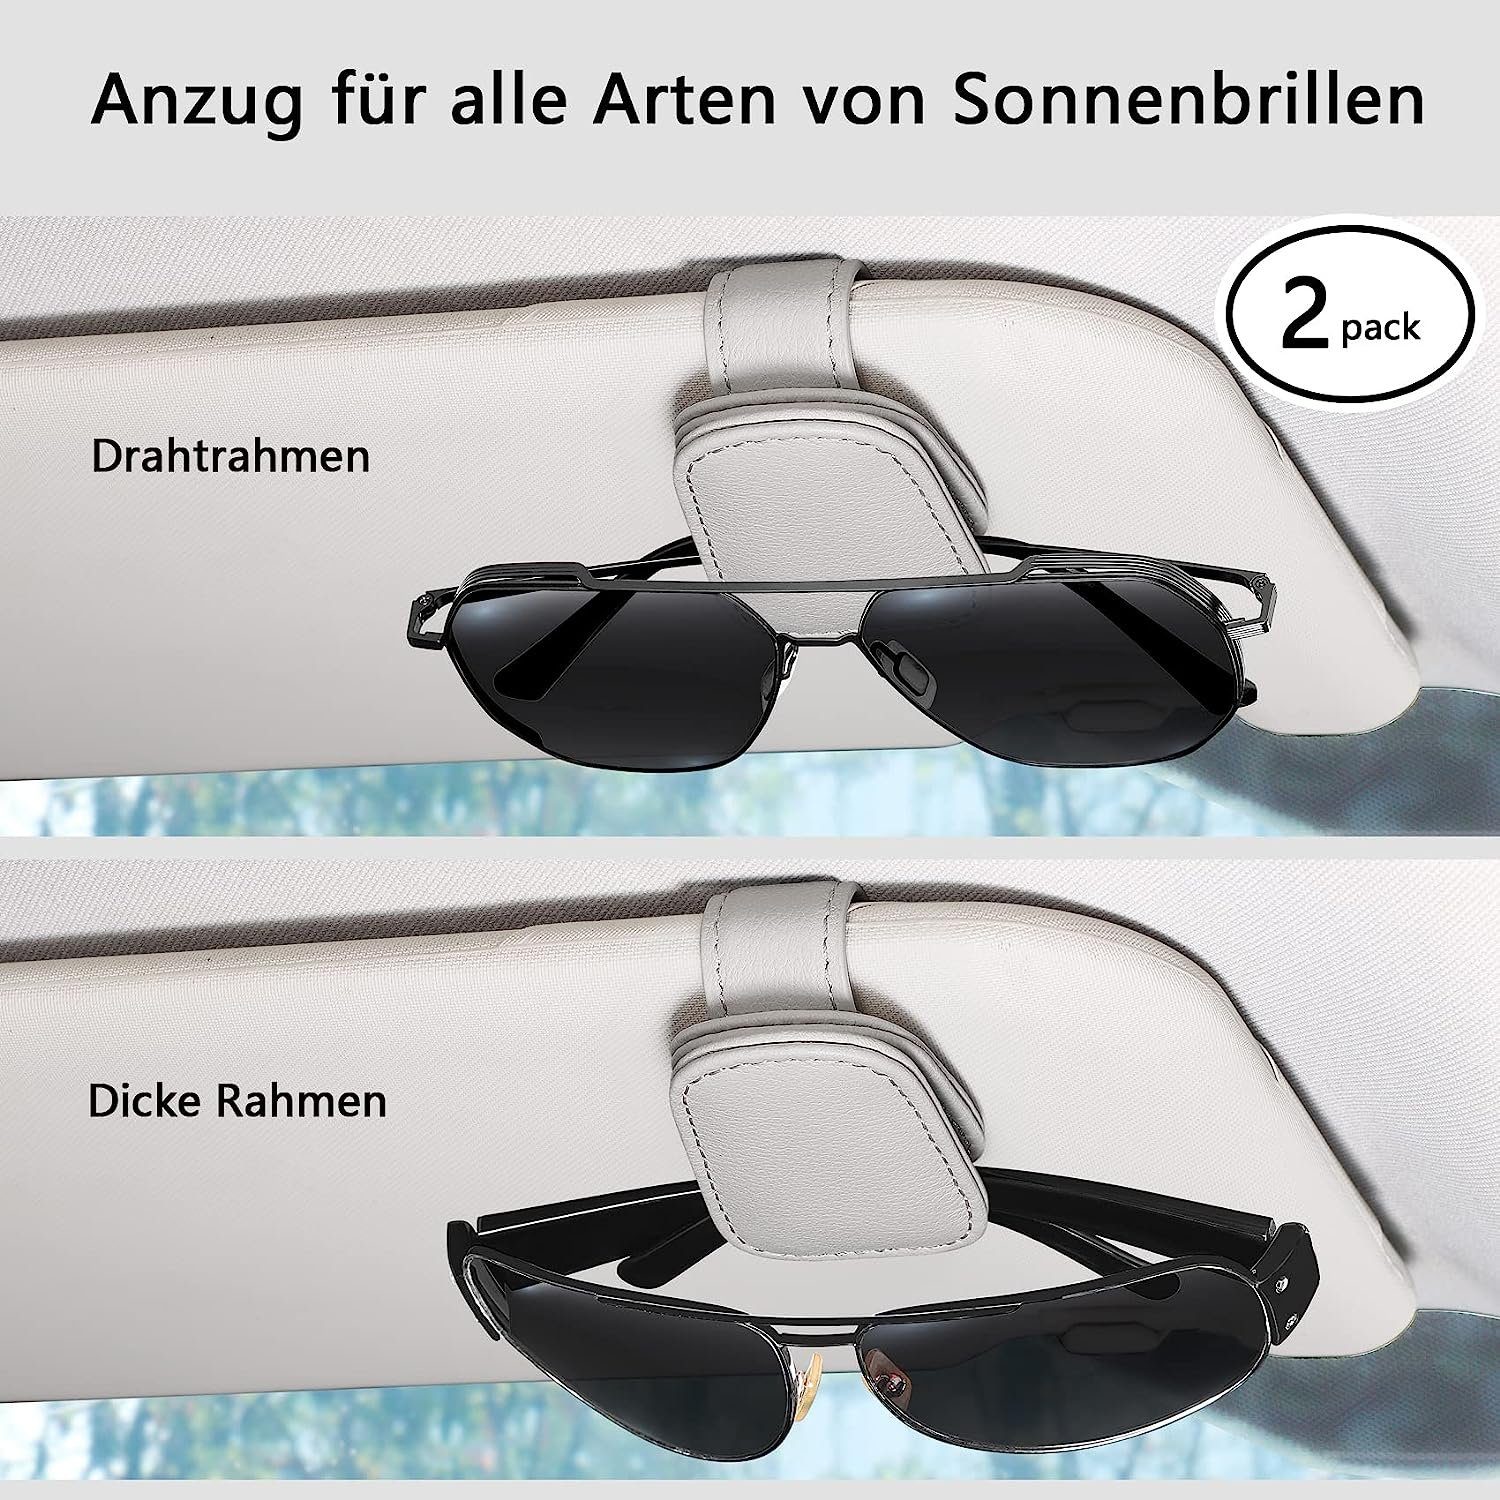 NUODWELL Autosonnenschutz 2 Pack Brillenhalter Visier Auto Grau Sonnenblende, Sonnenbrillenhalterung